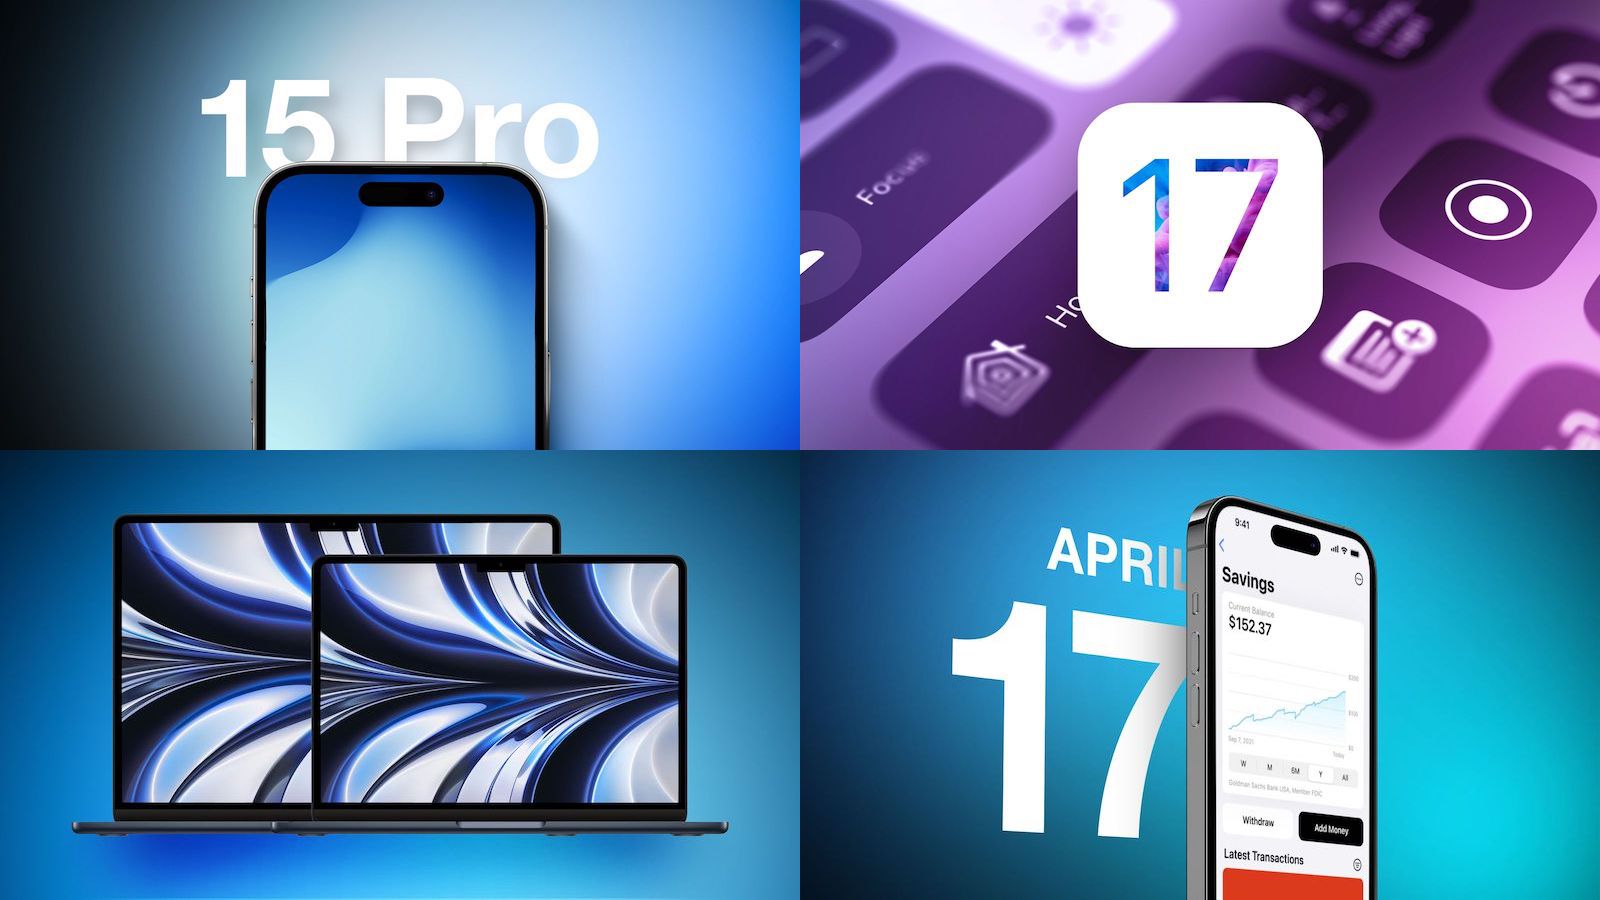 Top Stories: iPhone 15 Pro and iOS 17 Rumors, Apple Card Savings Coming Soon, and More - macrumors.com